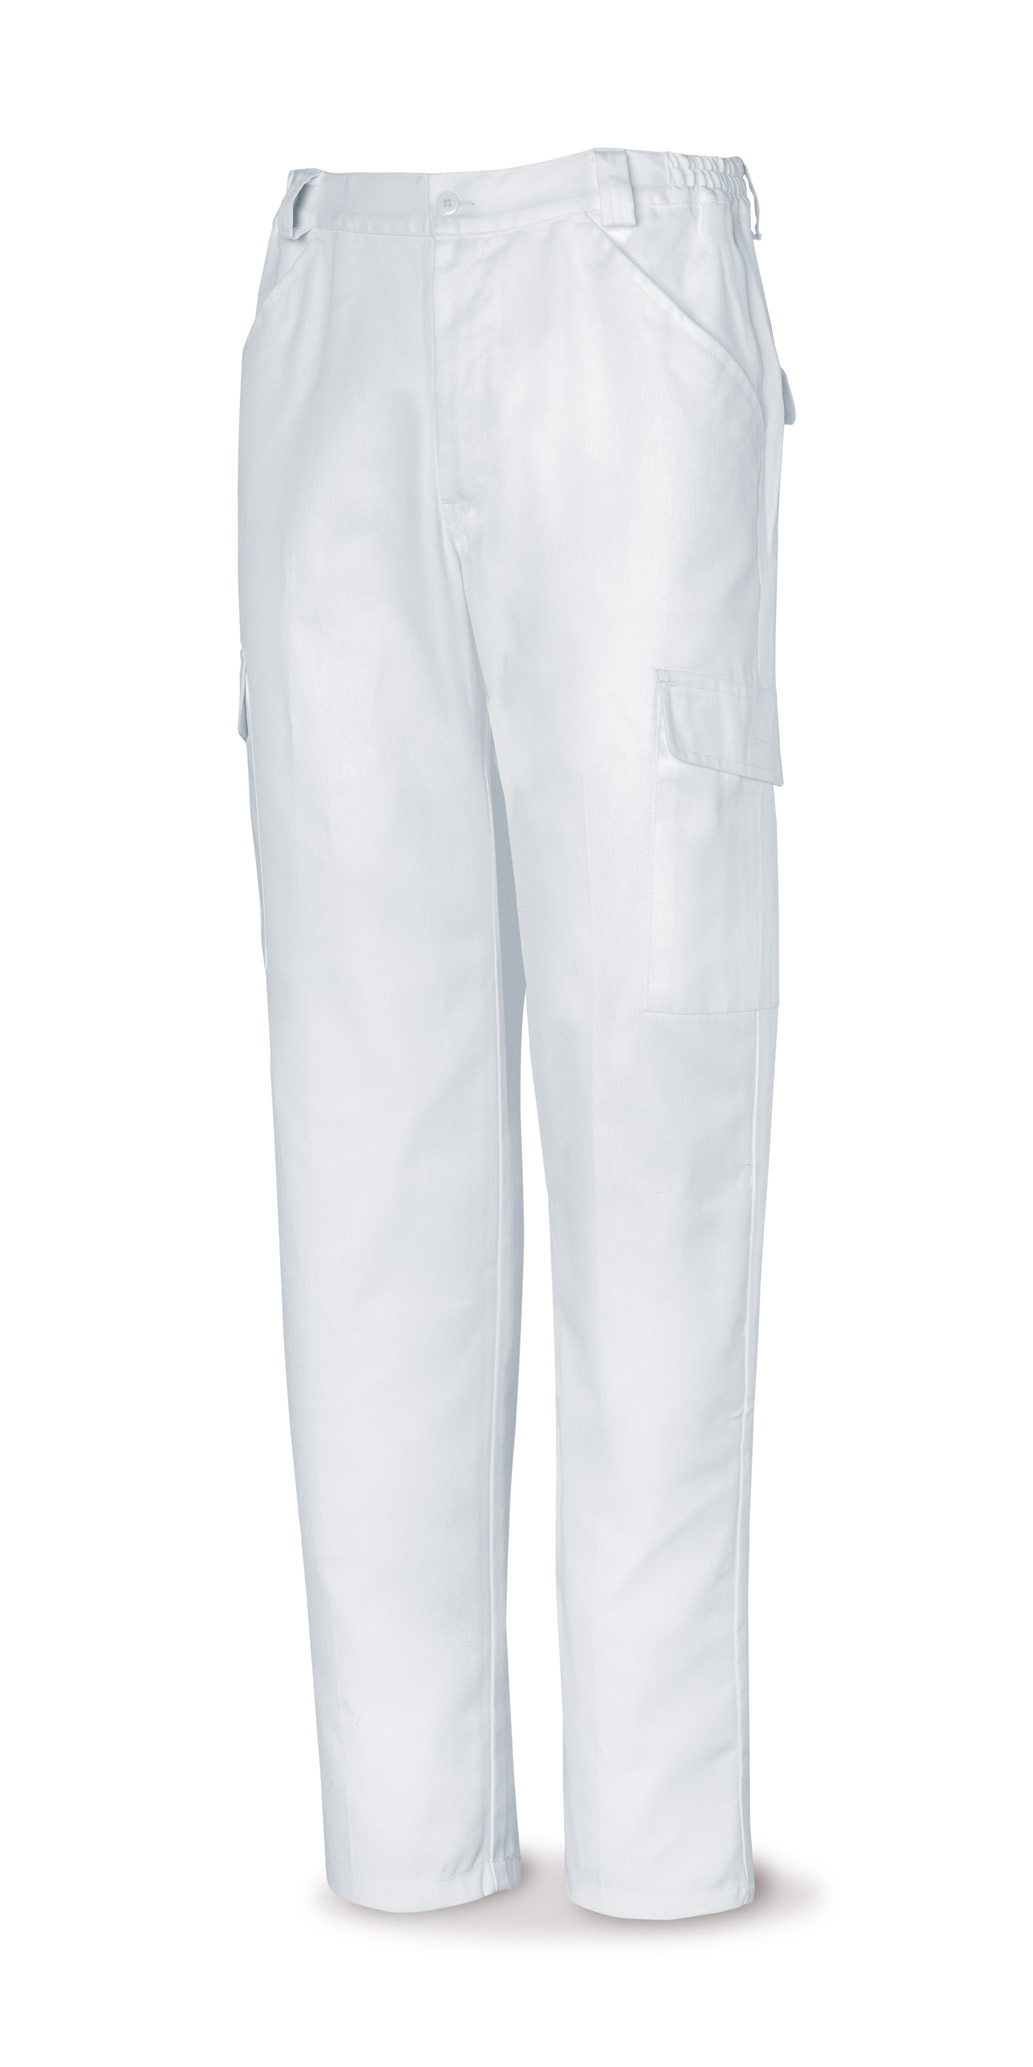 388-PB Vestuario Laboral Serie Básica Pantalón blanco poliéster/algodón 200 g. Multibolsillos.